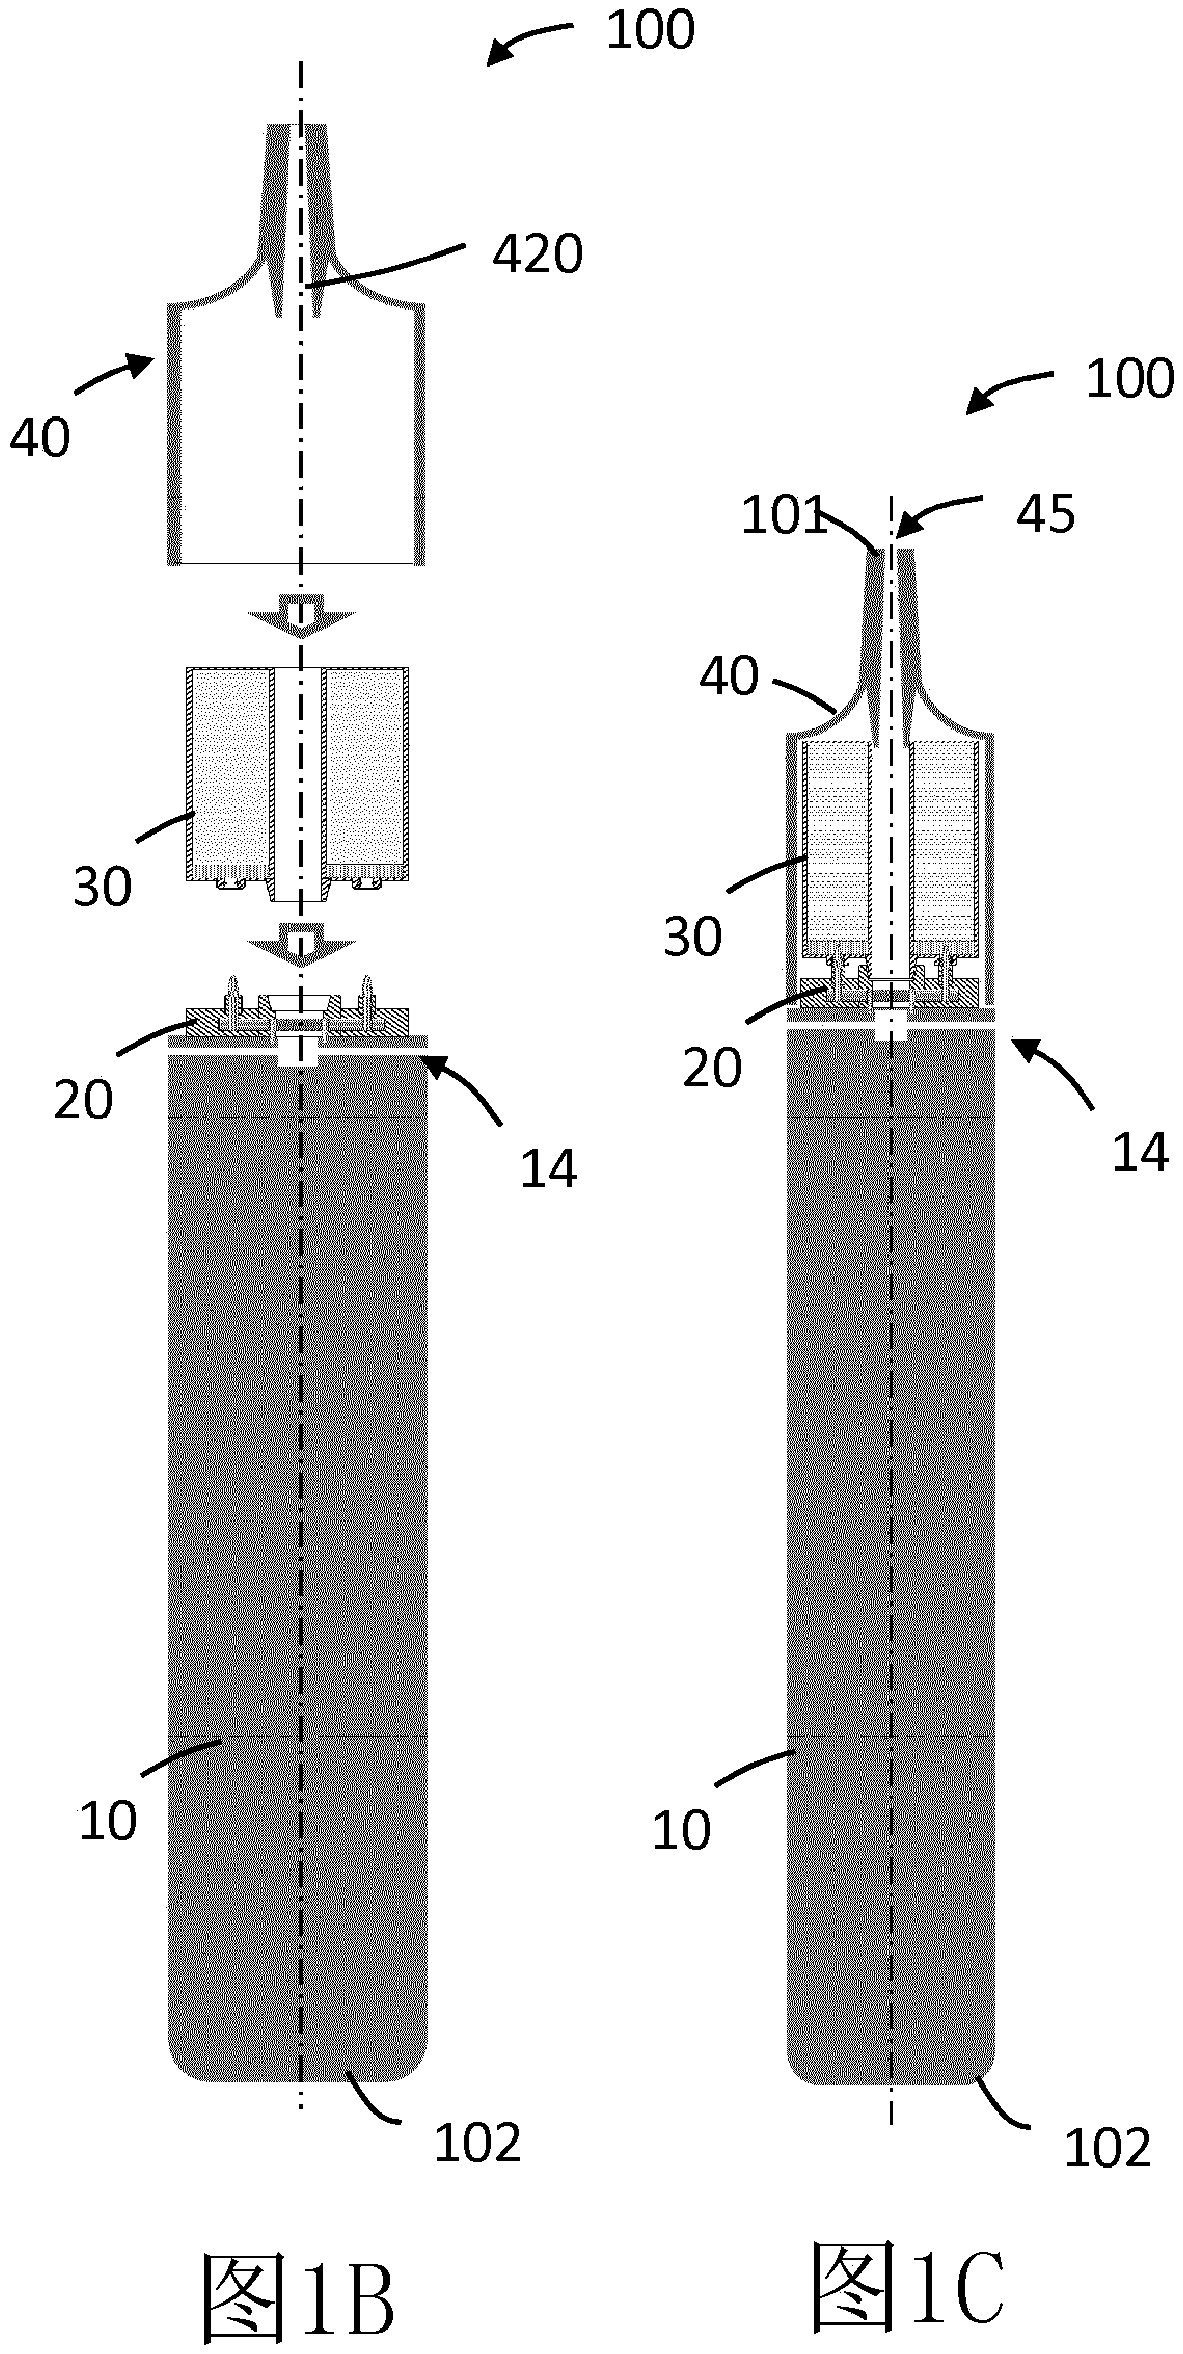 Aerosol generating system with separate capsule and vaporizing unit